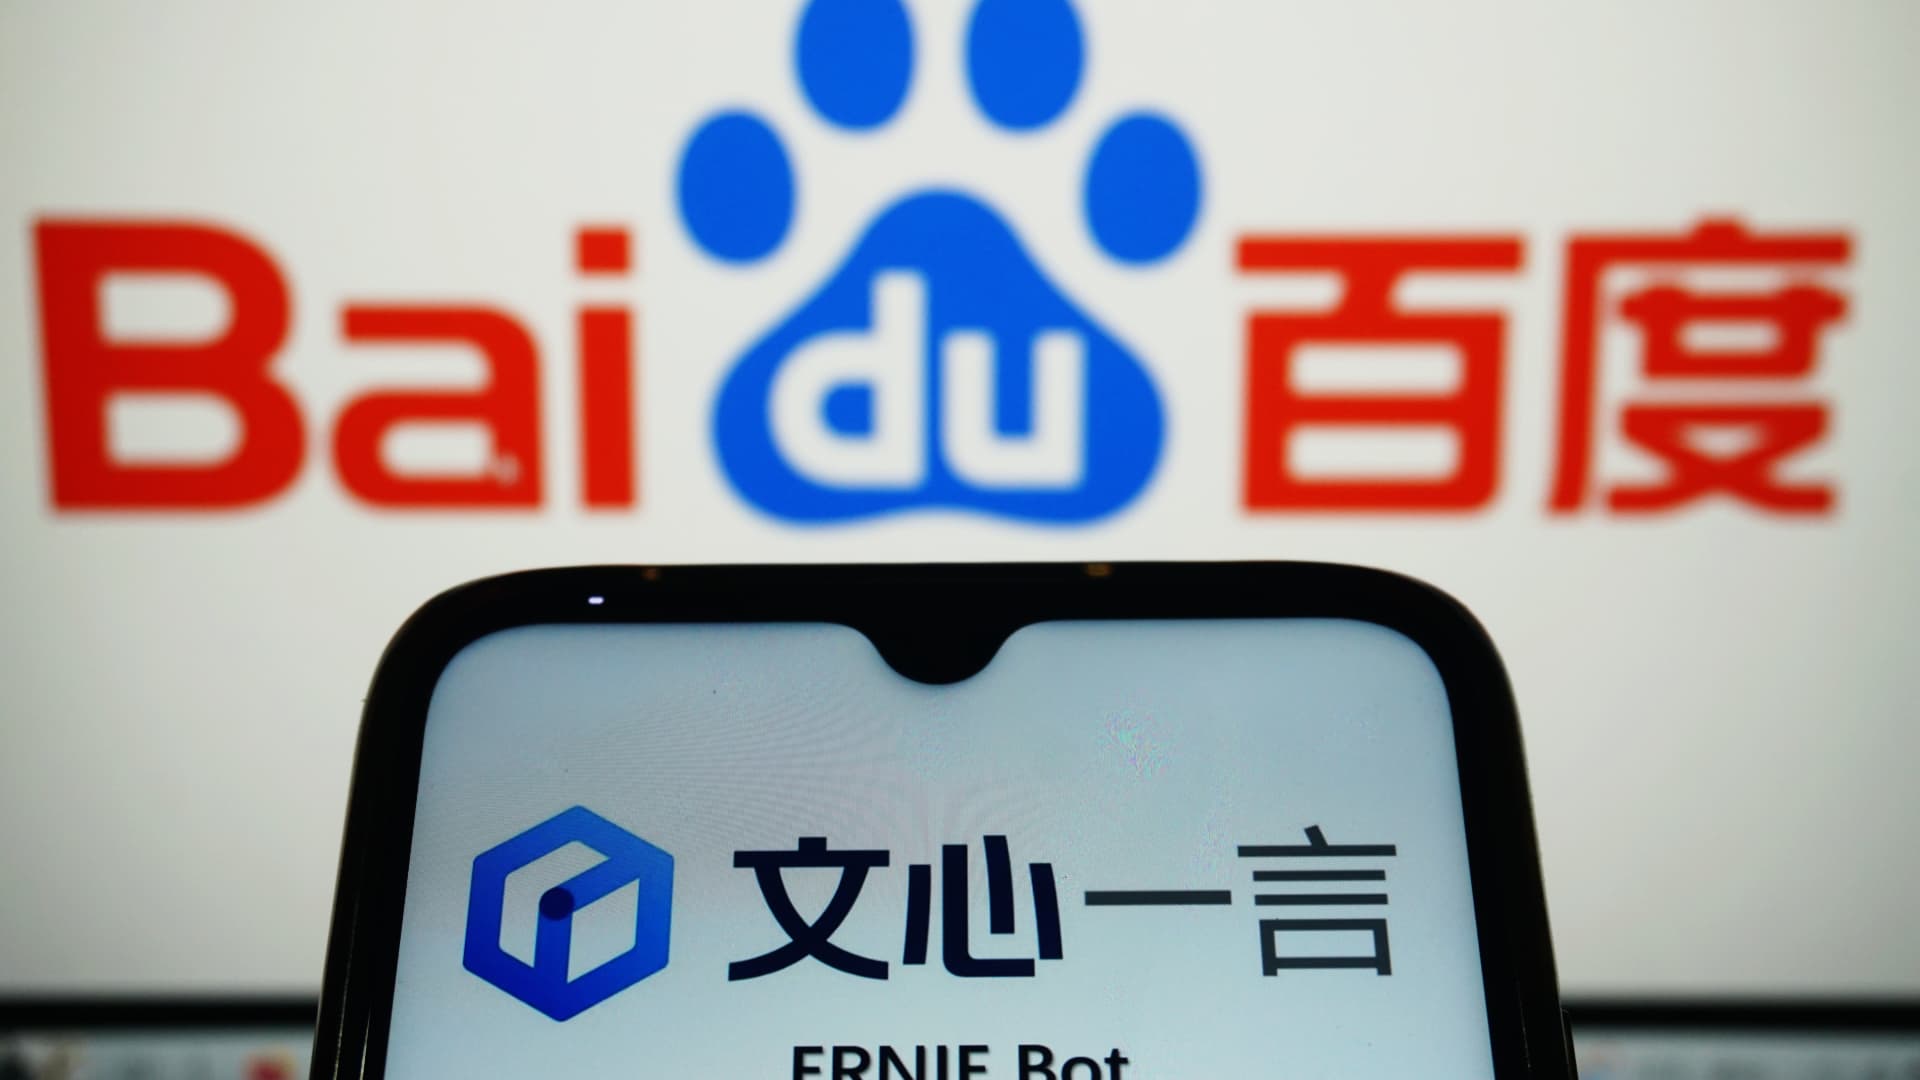 China's Baidu claims its Ernie Bot beats ChatGPT on key tests as A.I. race heats up